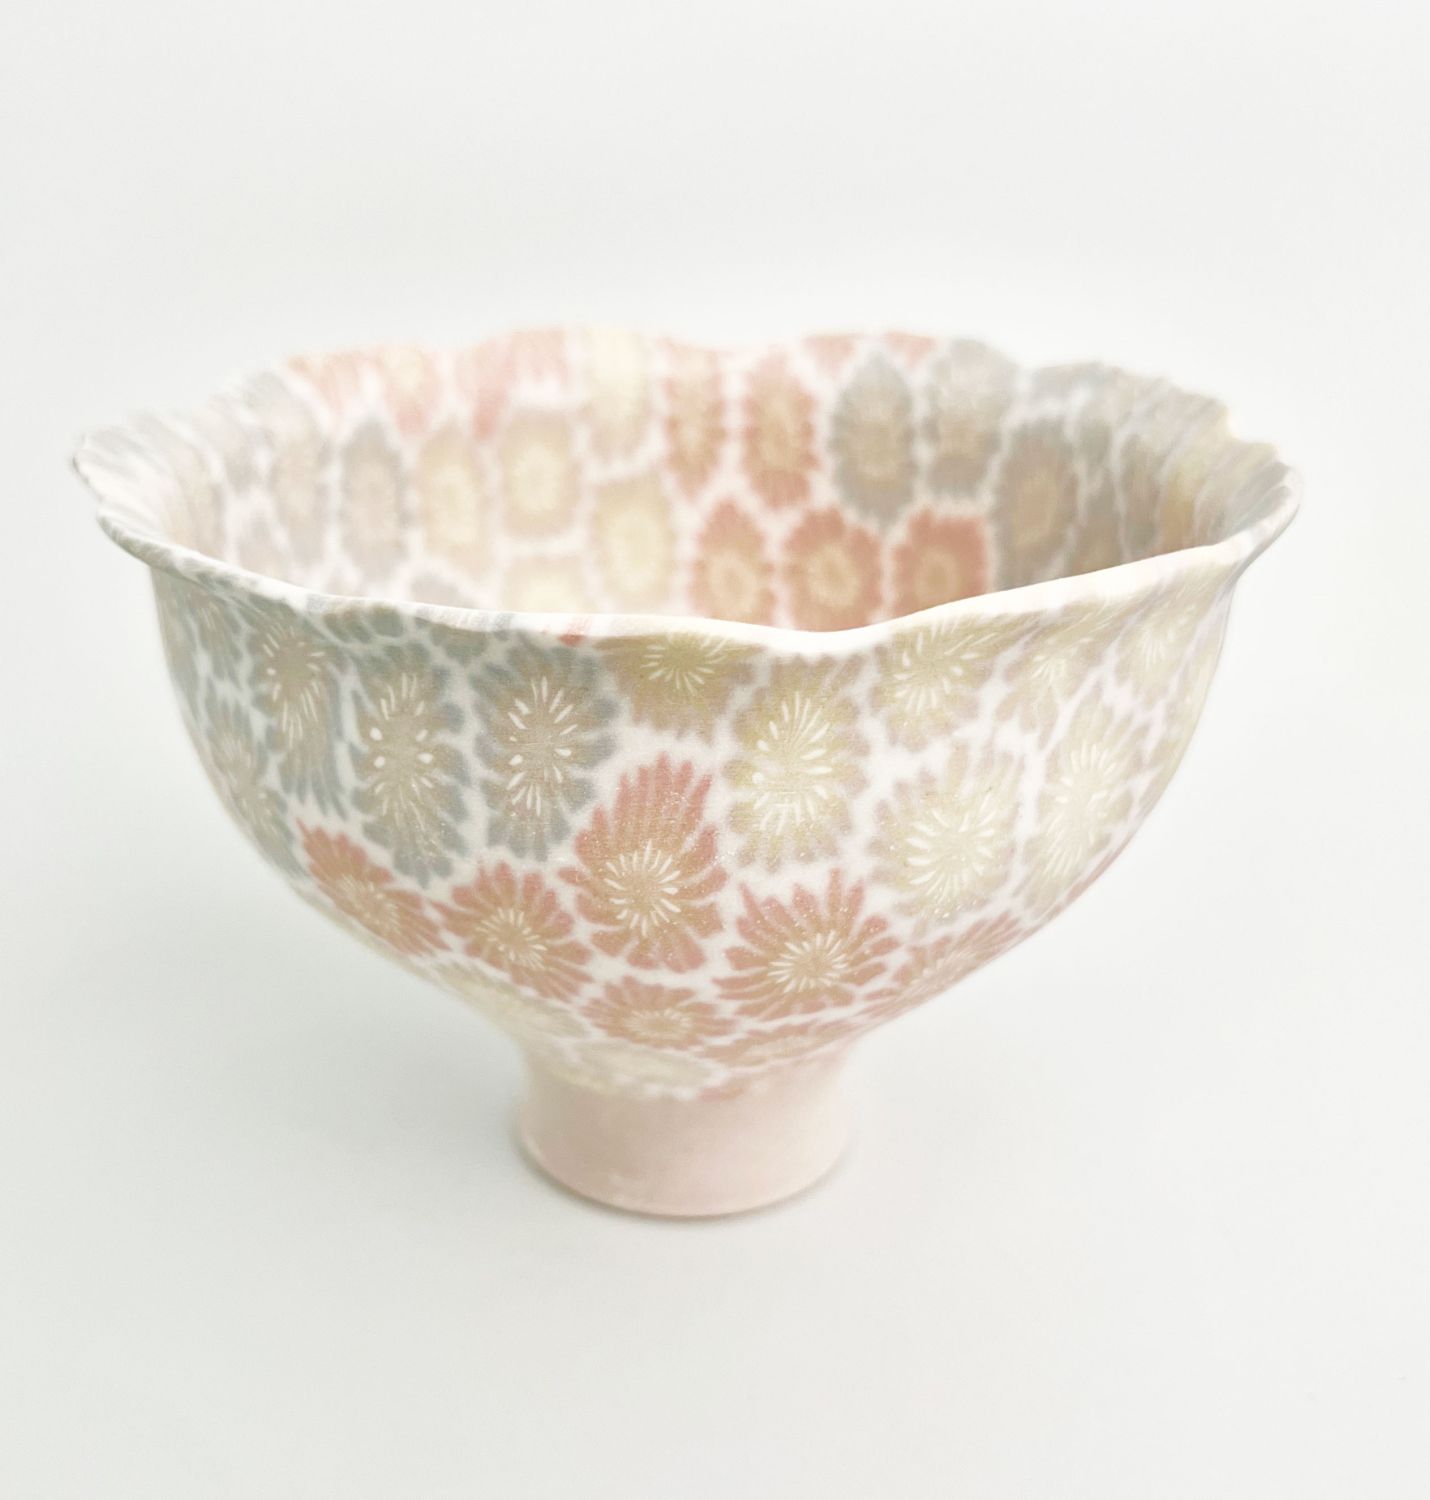 Eiko Maeda: Purple and Pink Bowl Product Image 1 of 2